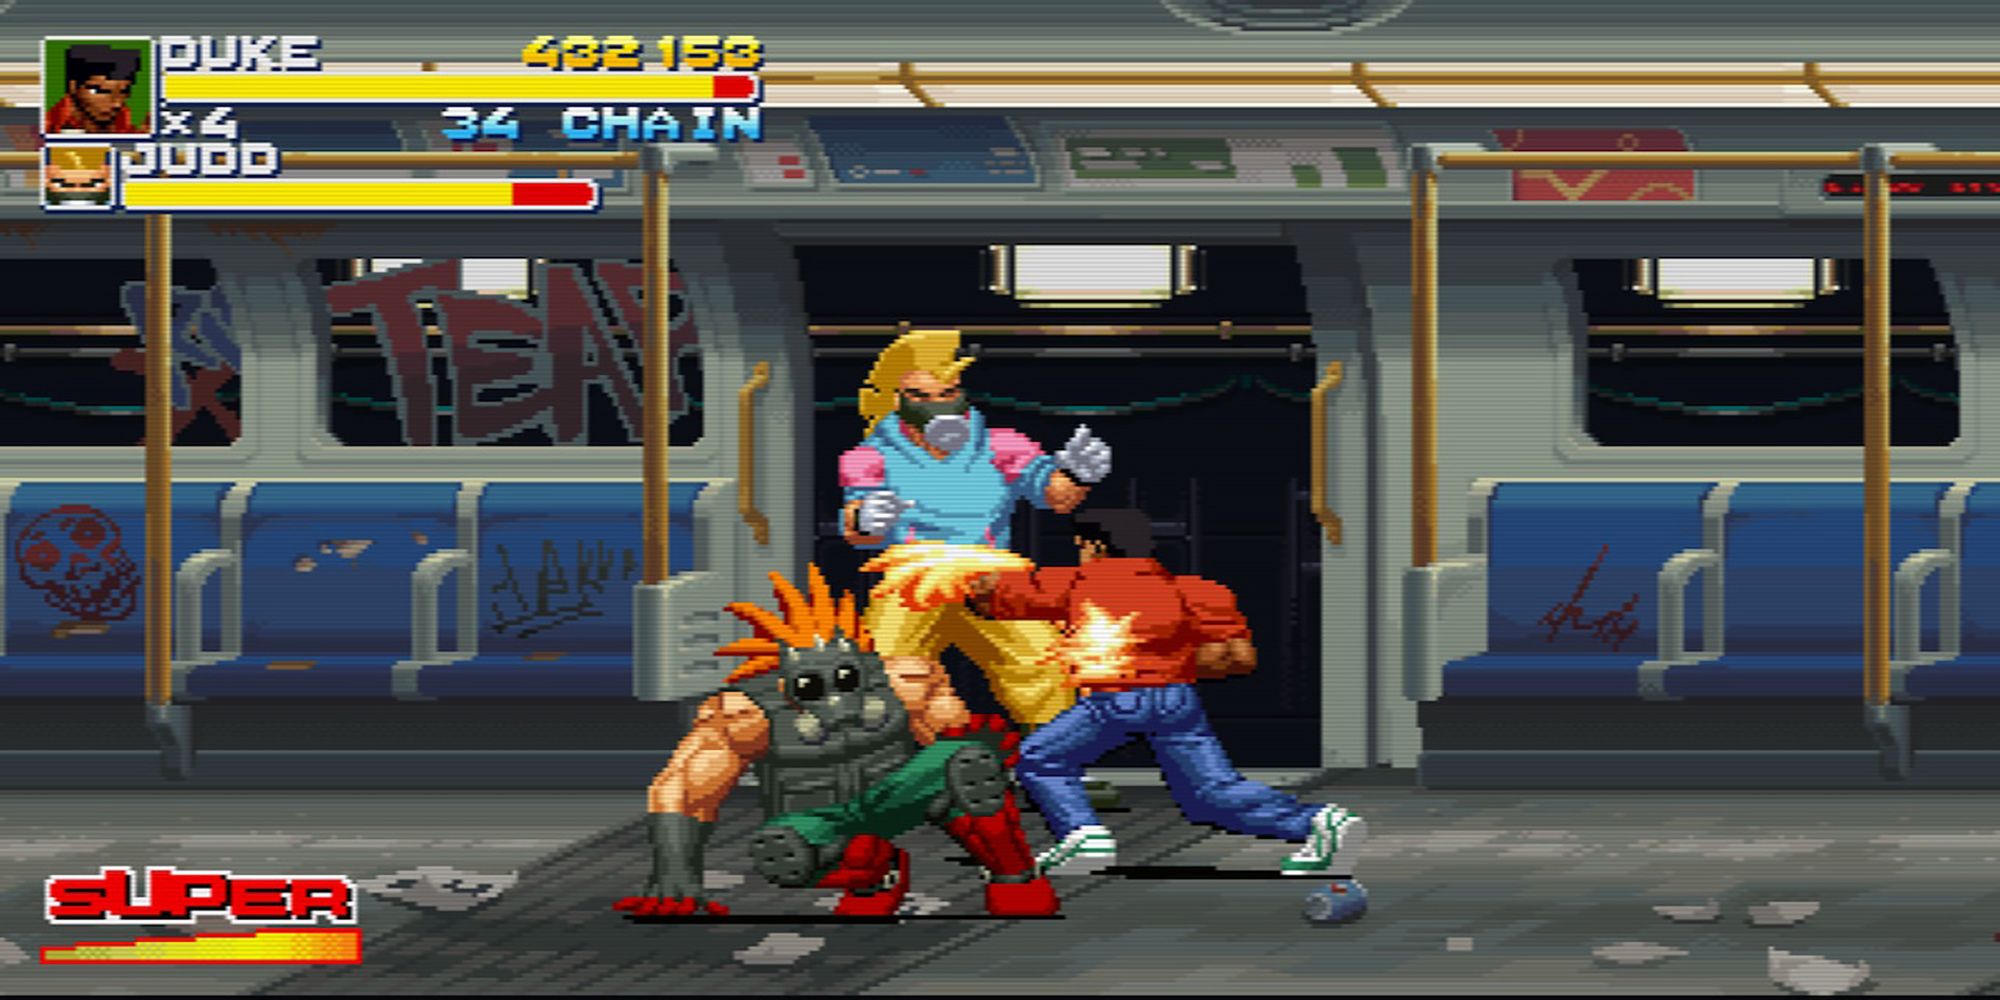 Duke sends fiery punches toward Diesel and Judd in a subway car brawl in Final Vendetta.